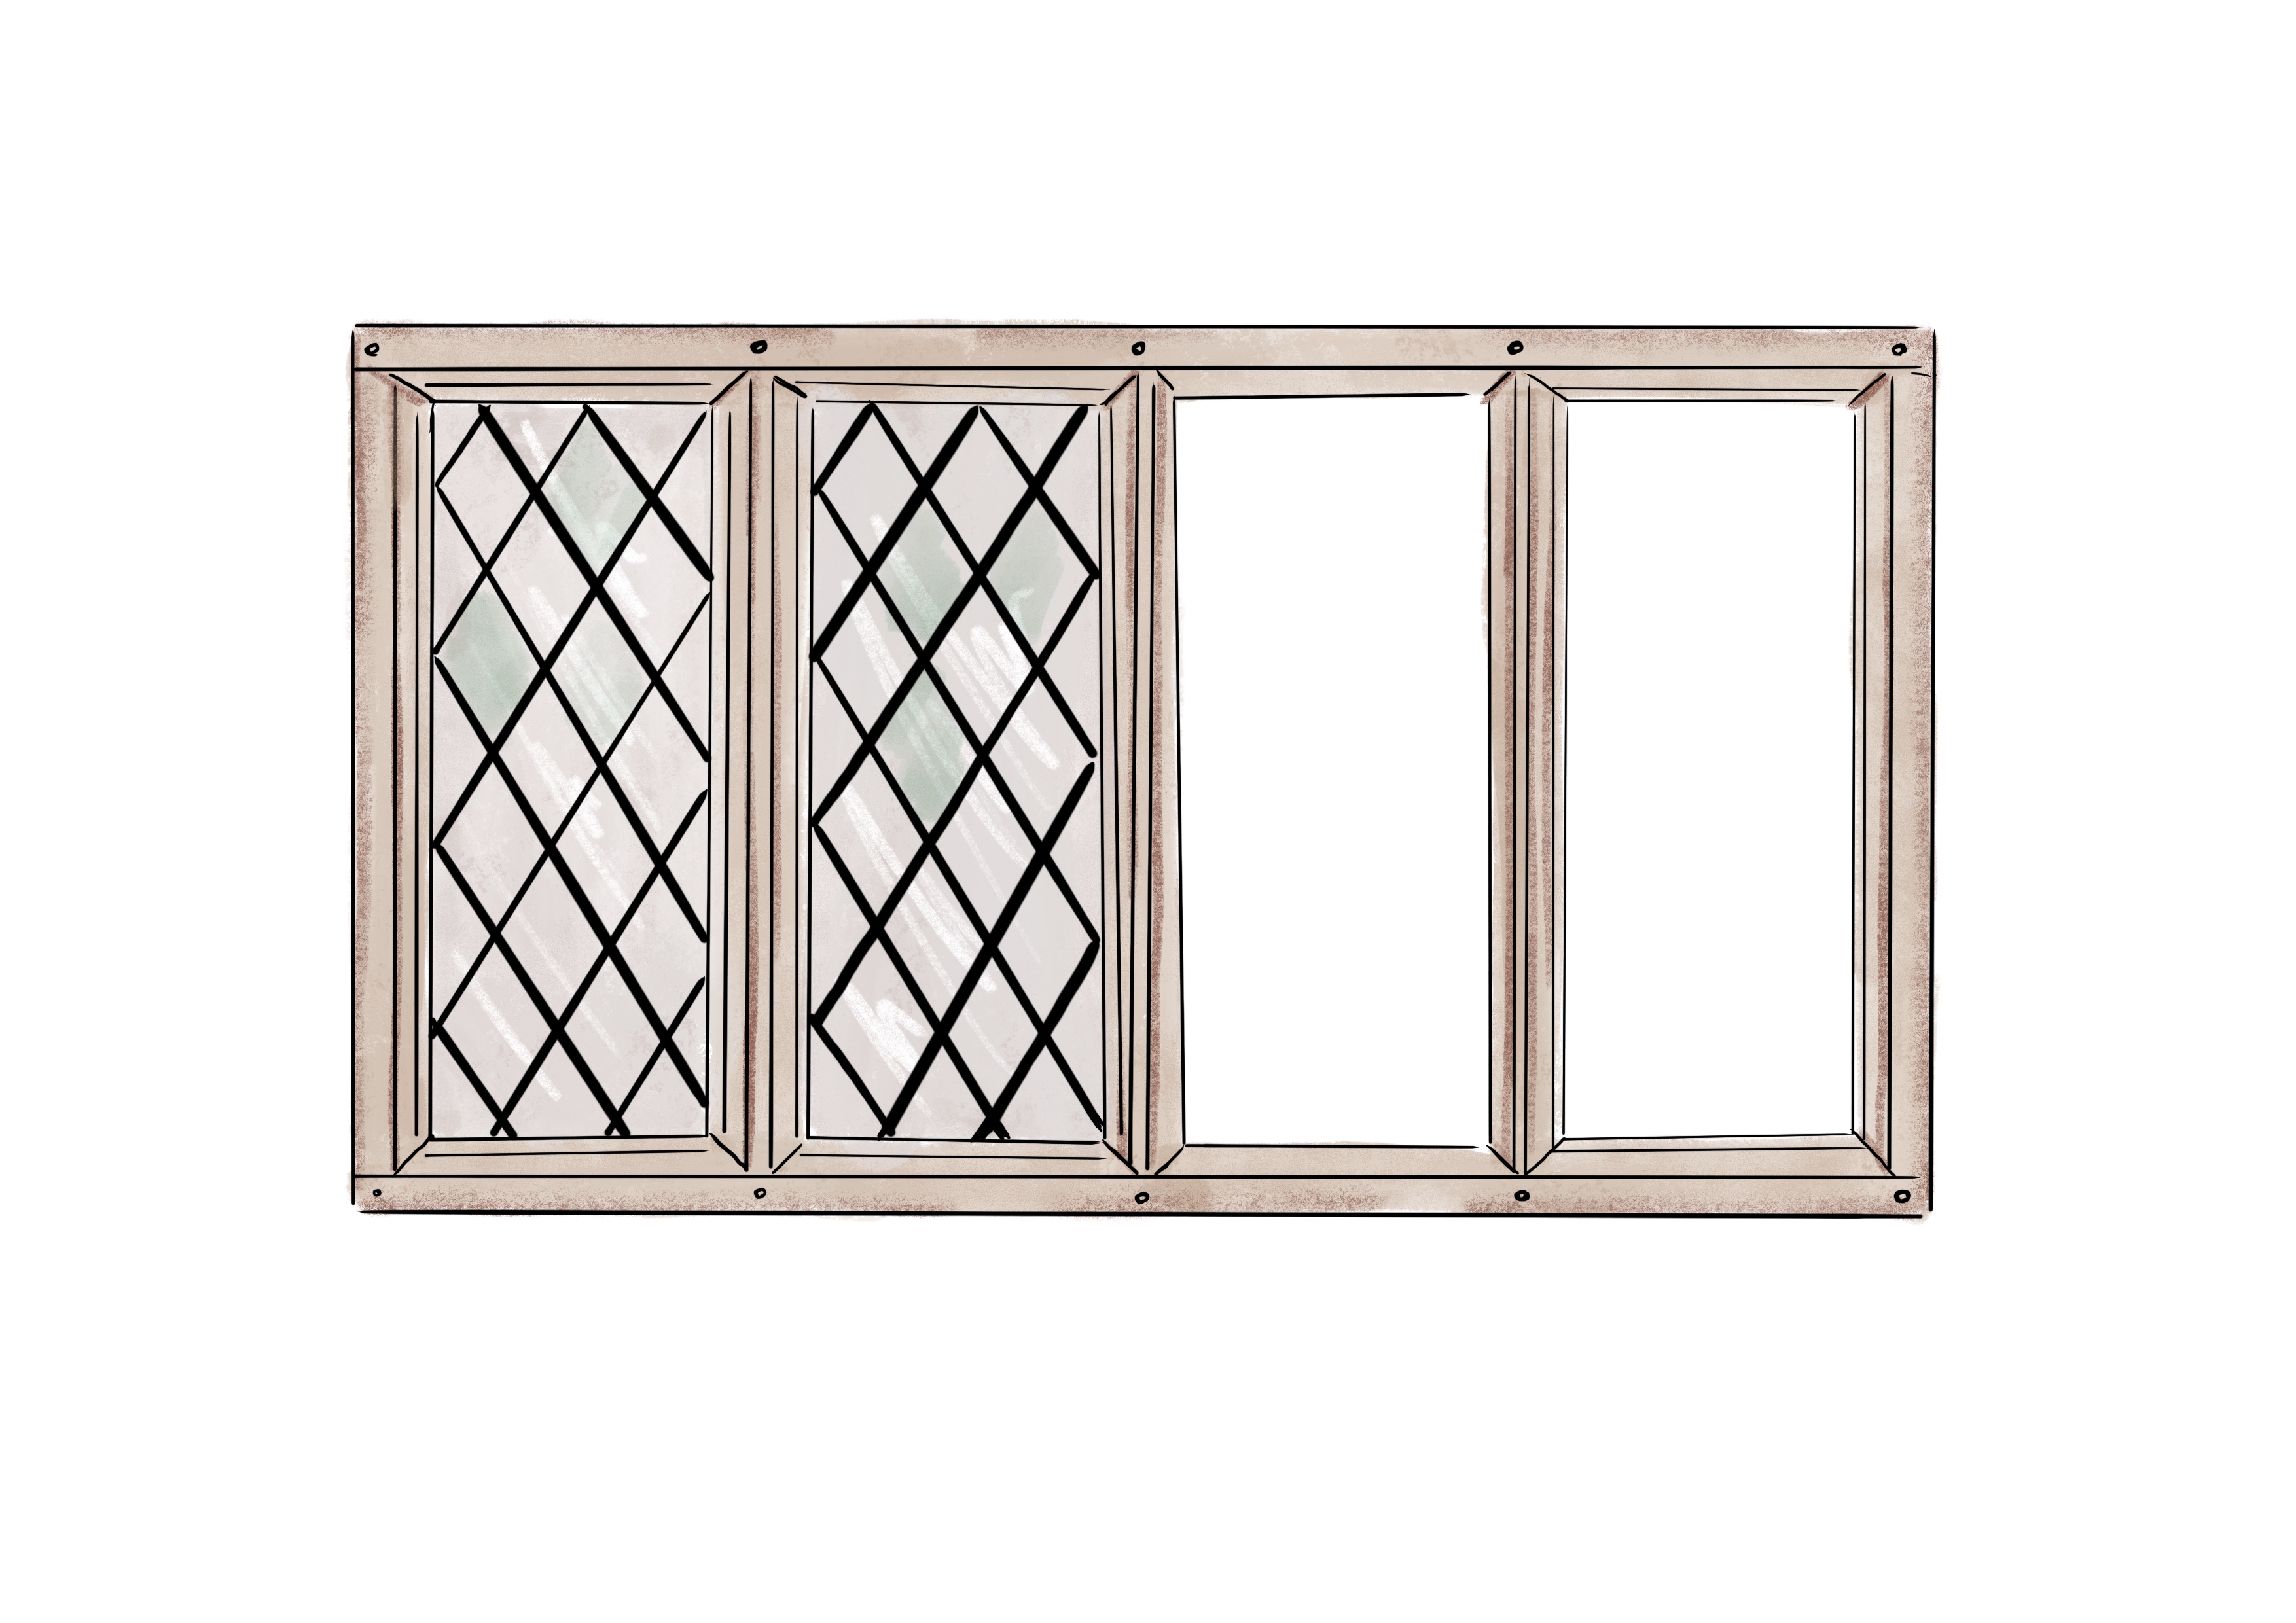 Heavy oak frame used until late 17th century in domestic work and until the late 18th century in agricultural buildings. Window frames sometimes in brick or rendered.